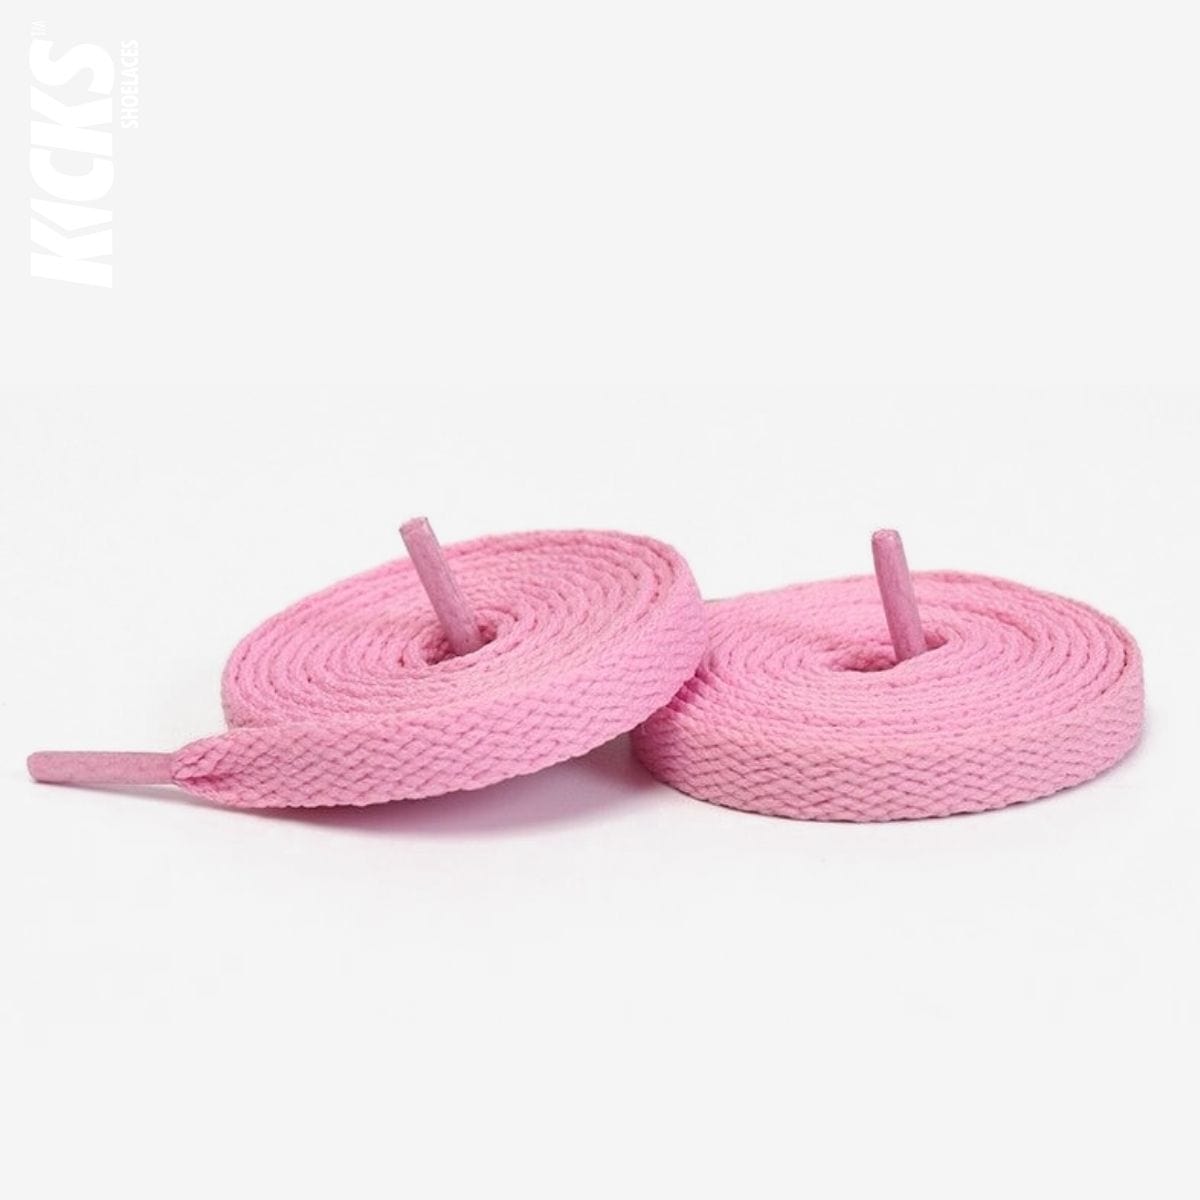 Pink Replacement Jordan Laces for Nike Air Jordan 1 Shoes by Kicks Shoelaces